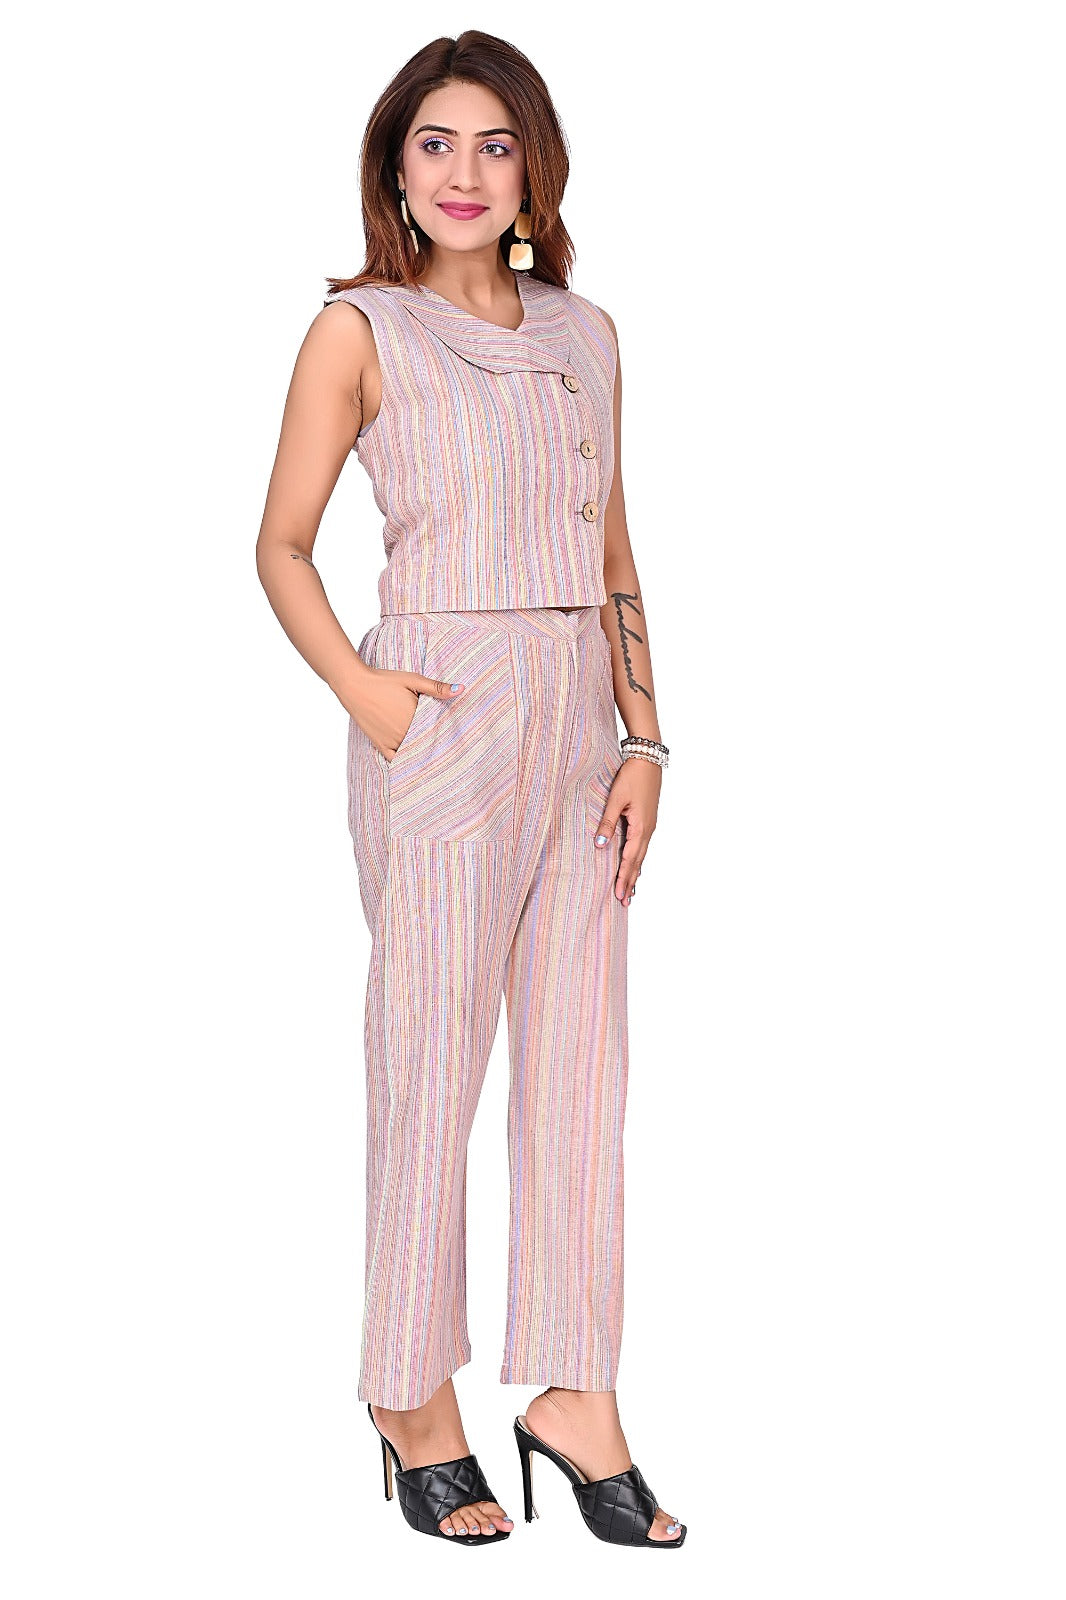 Nirmal online Premium Cotton Stripe co-ord set for Women in purple Colour